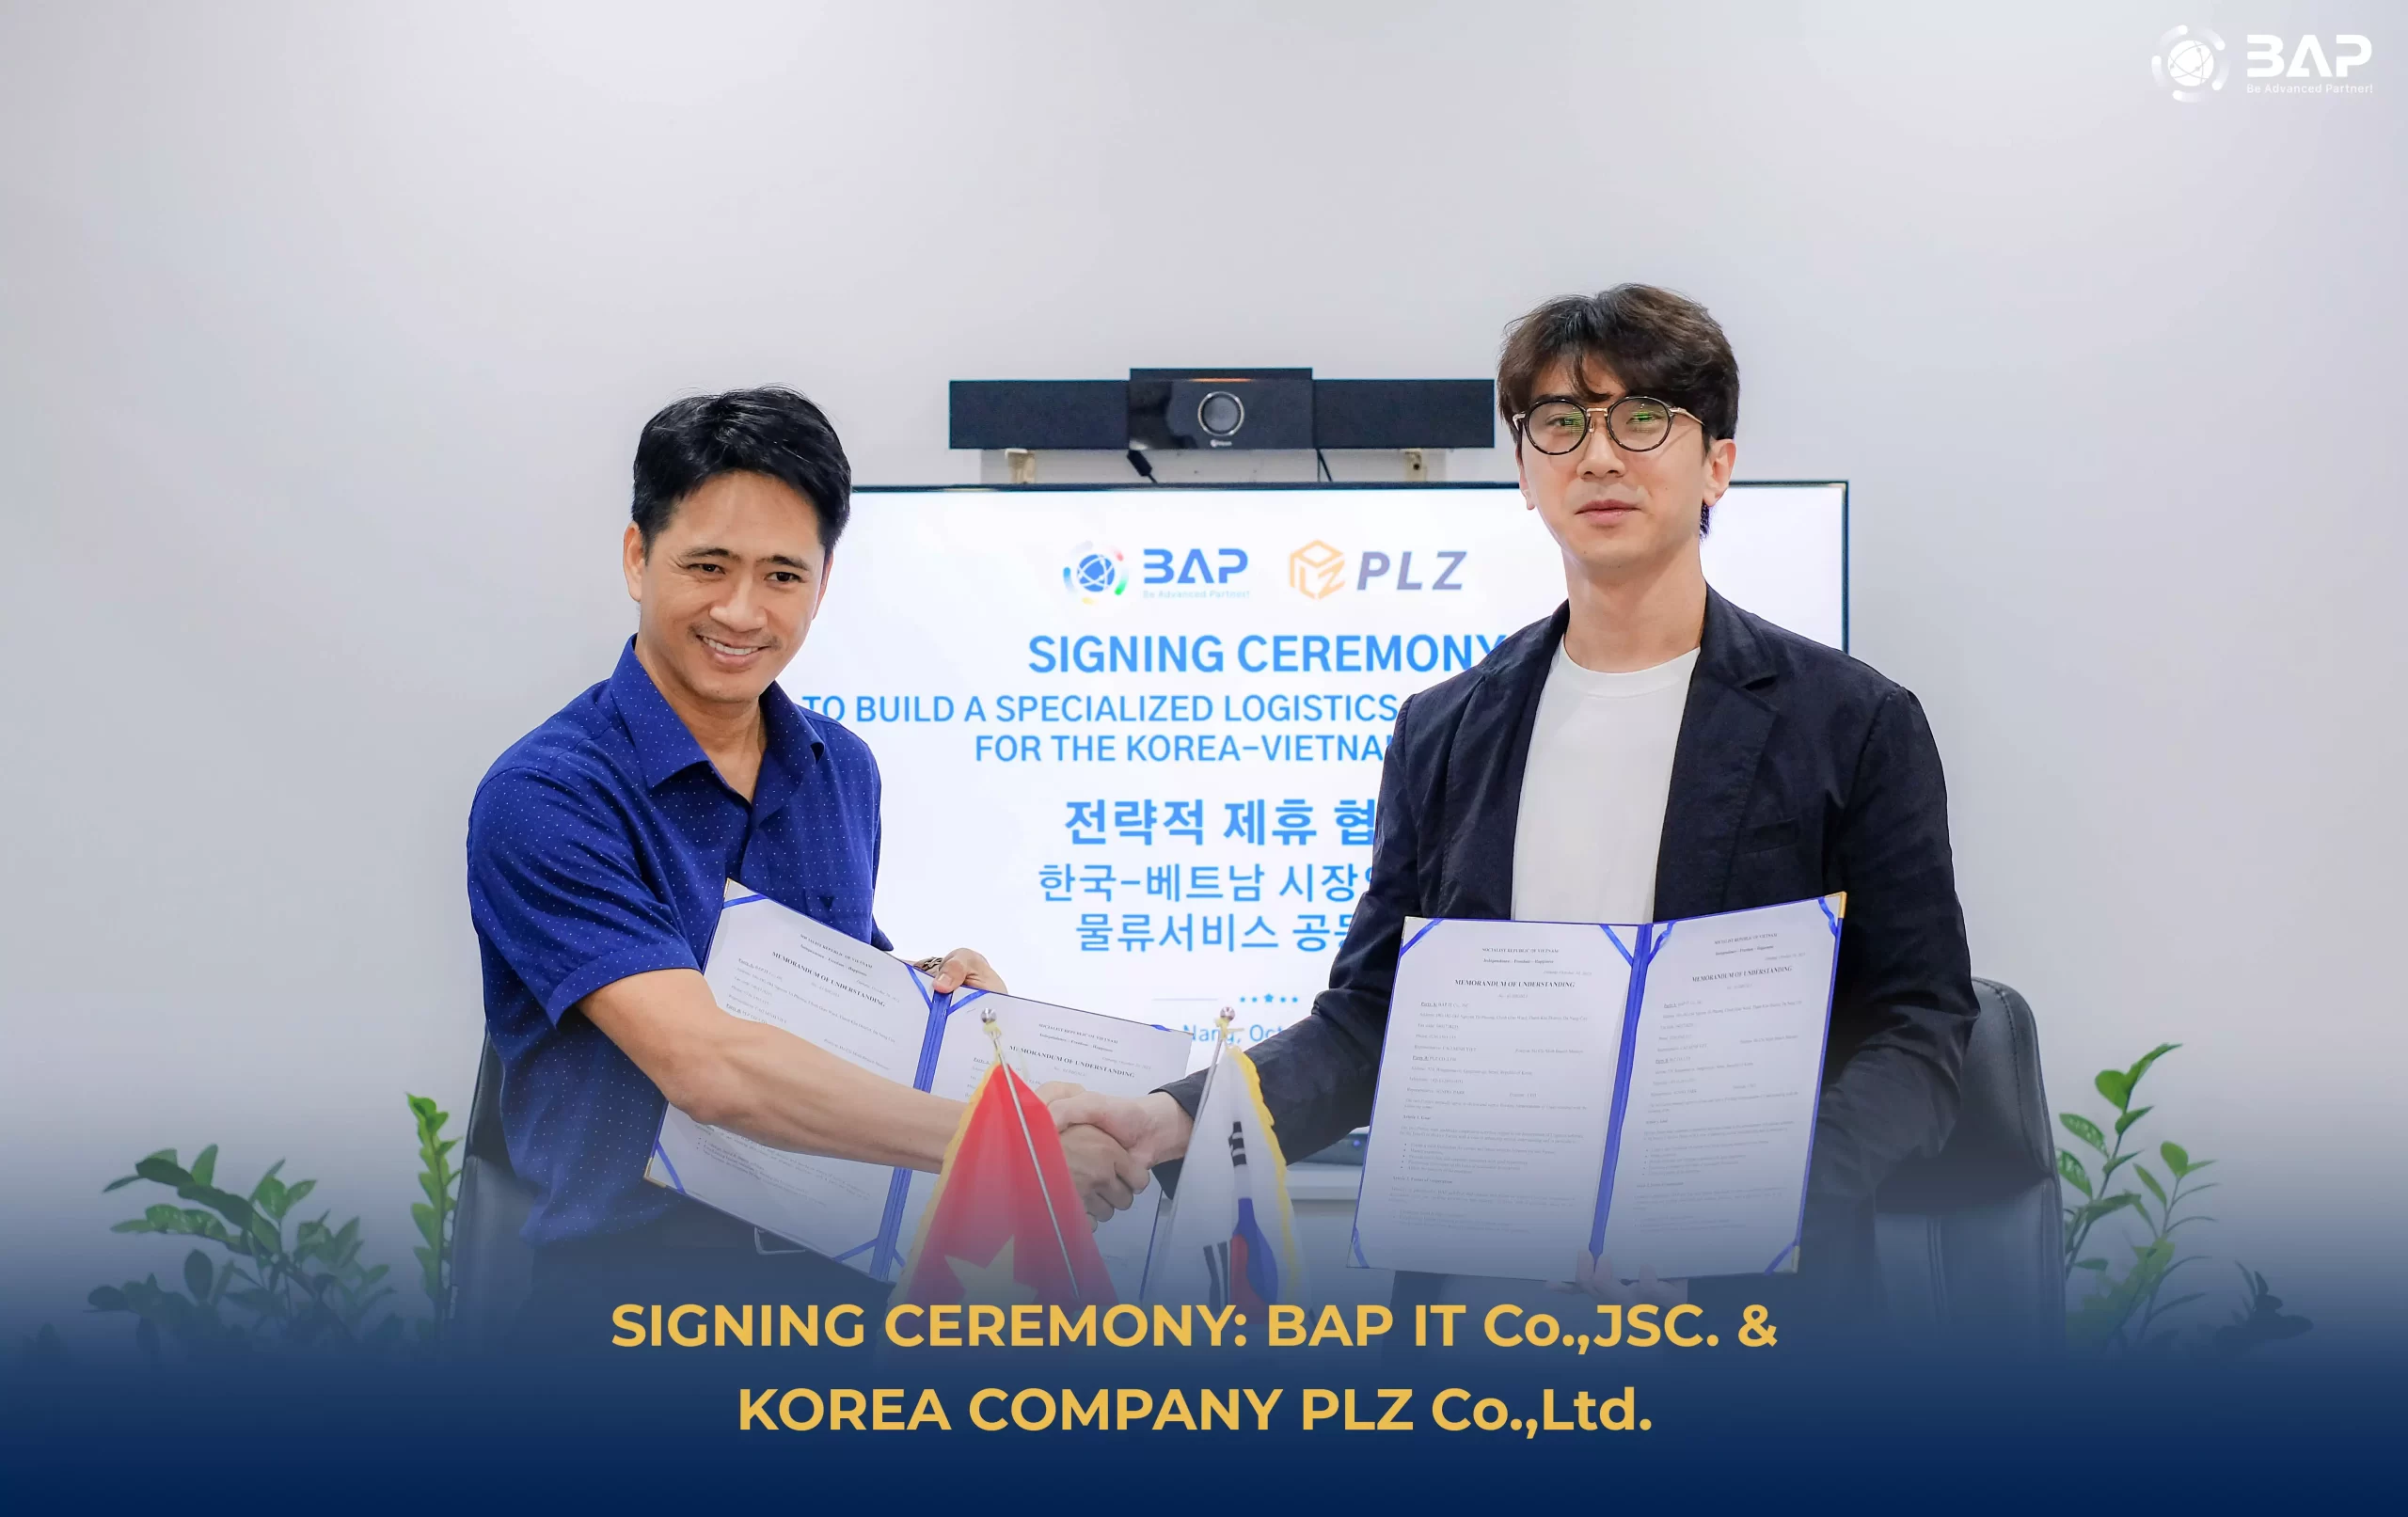 SIGNING CEREMONY: BAP & PLZ TO BUILD SPECIALIZED LOGISTICS SERVICE SOLUTIONS FOR THE KOREA – VIETNAM MARKET